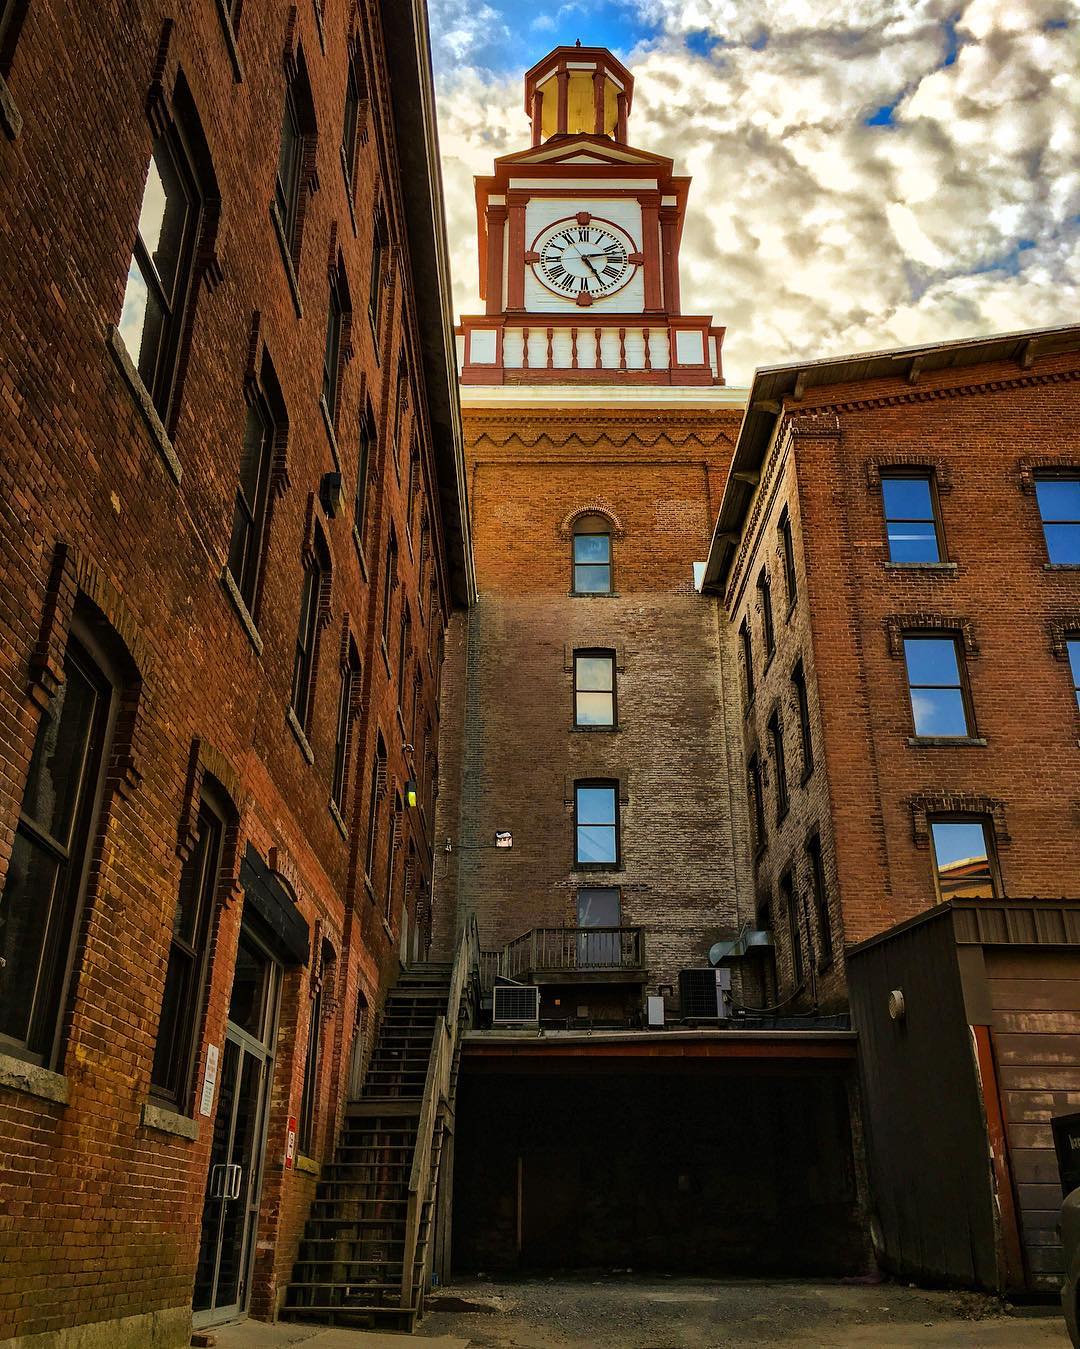 Clocktower Place in Maynard, MA. Photo by Instagram user @jaimefloresphotography